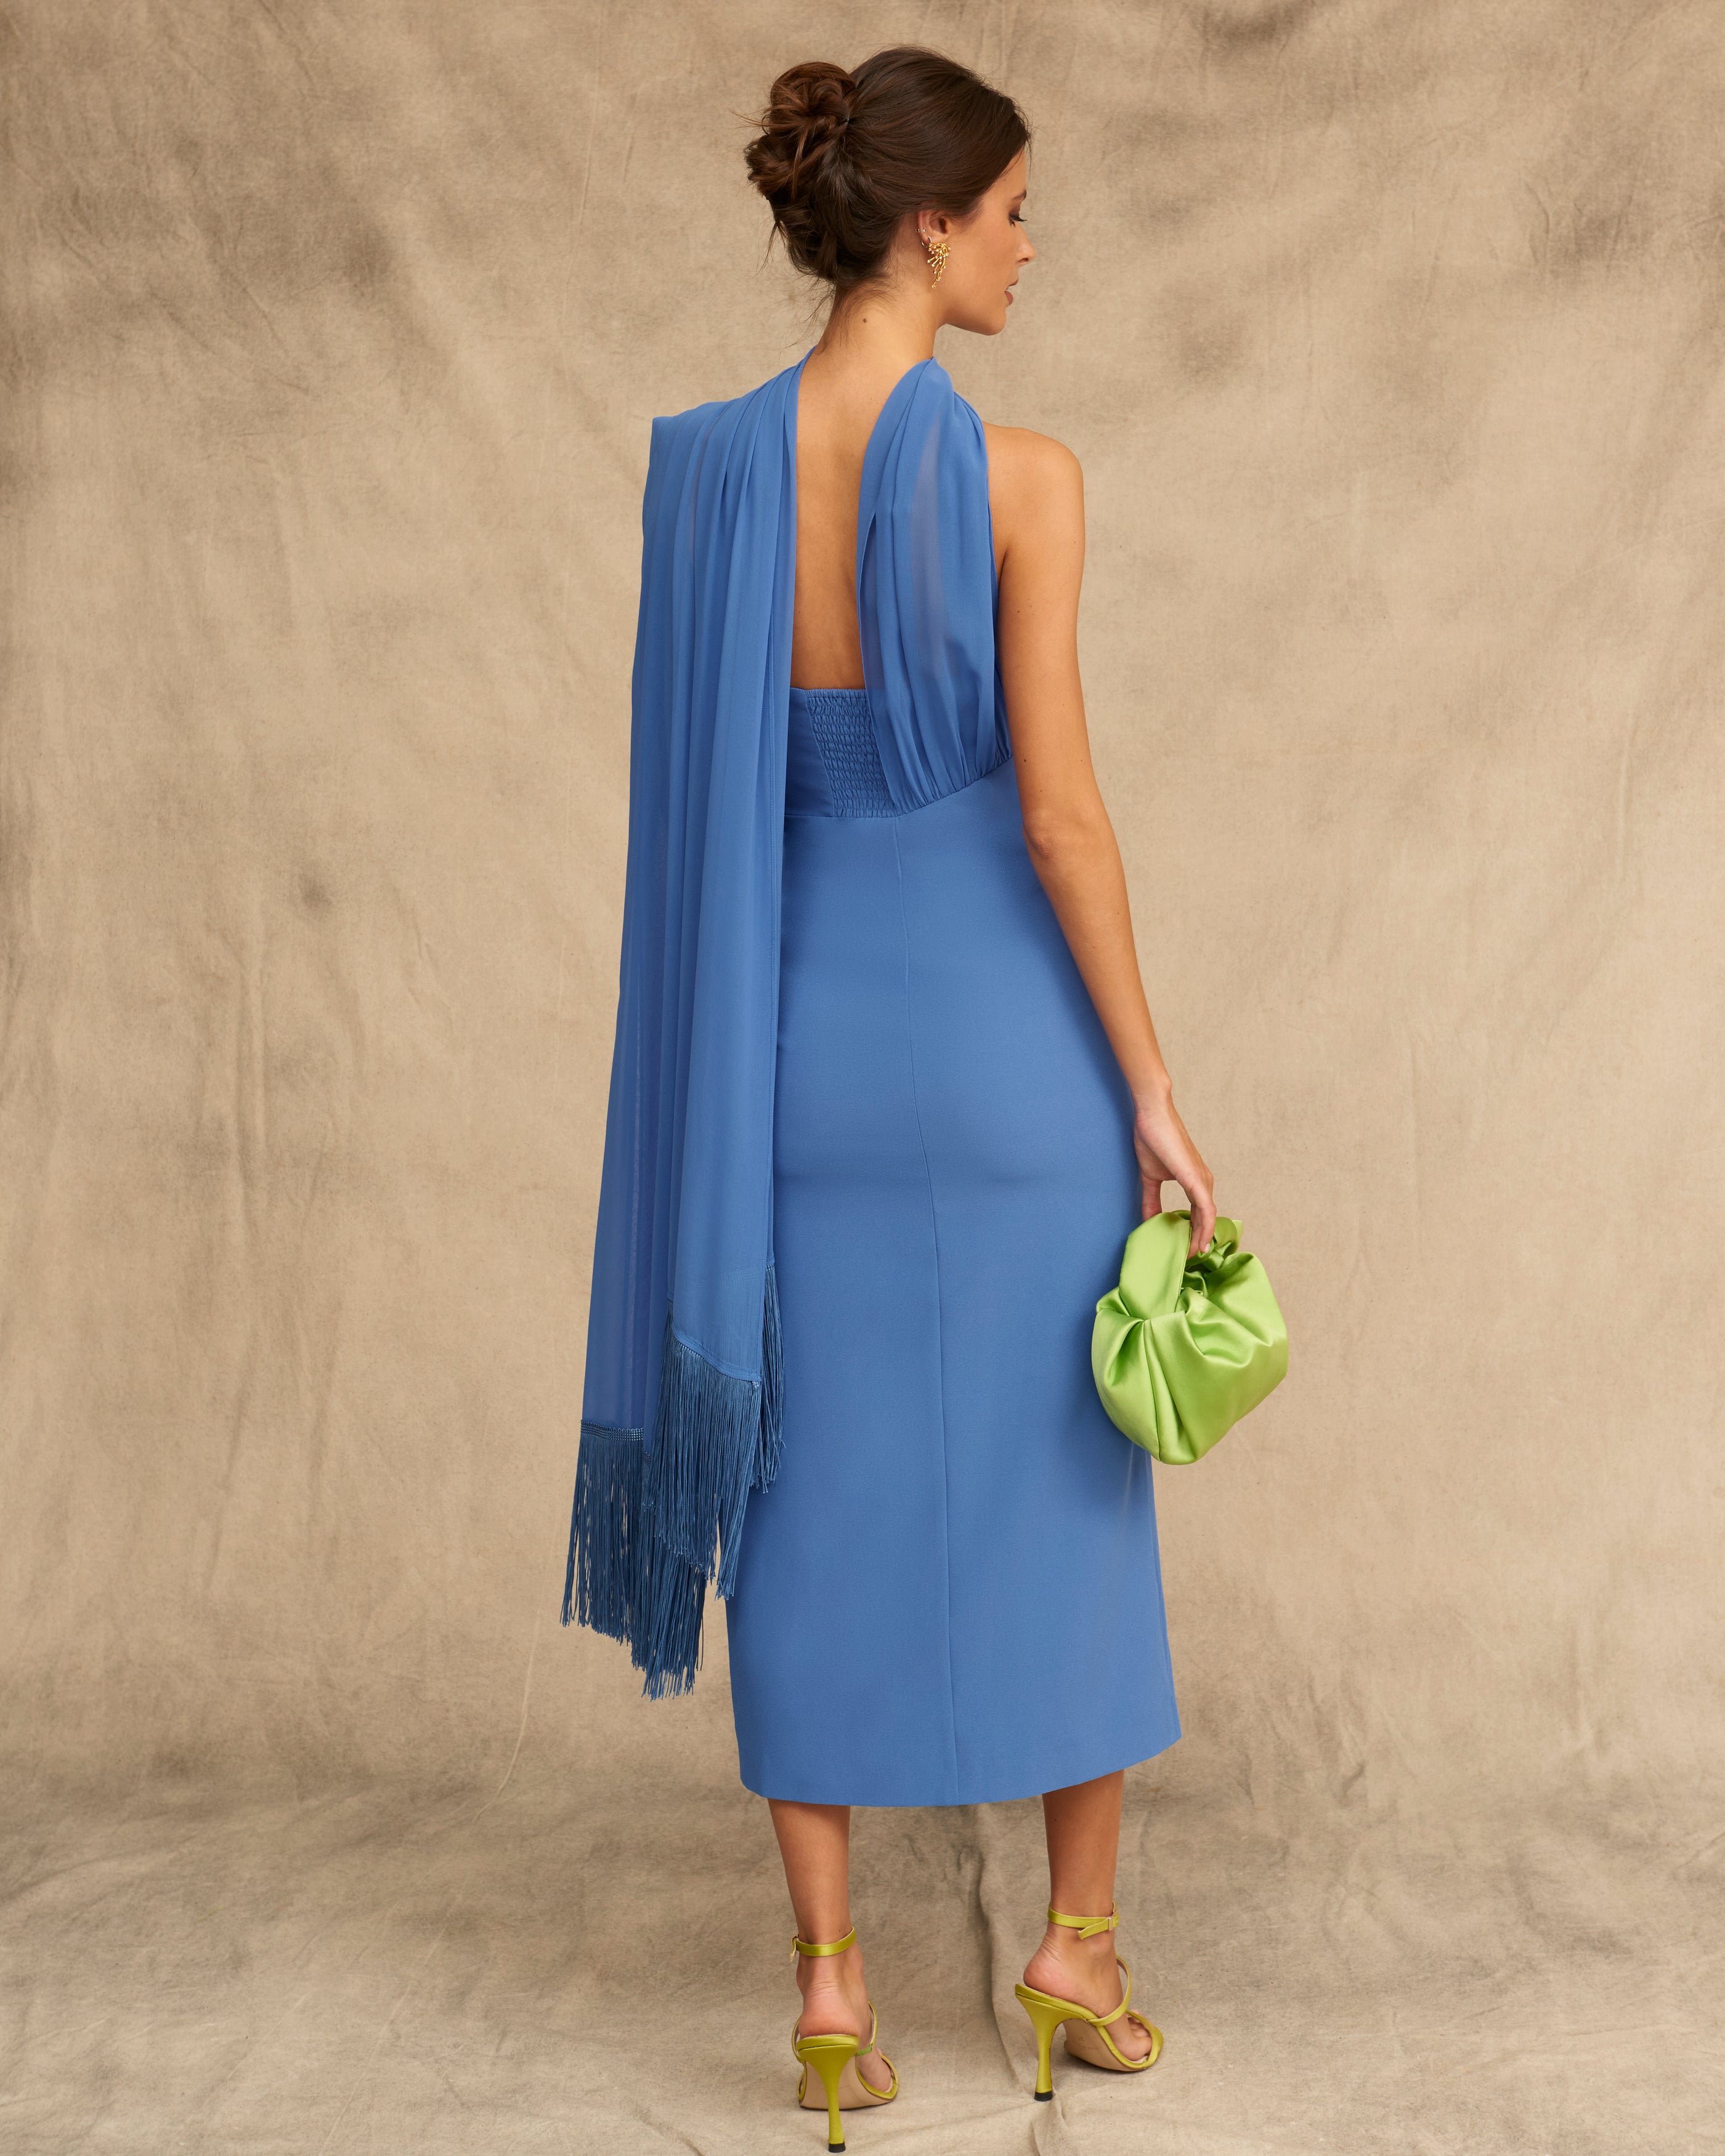 Lyretta Blue Dress